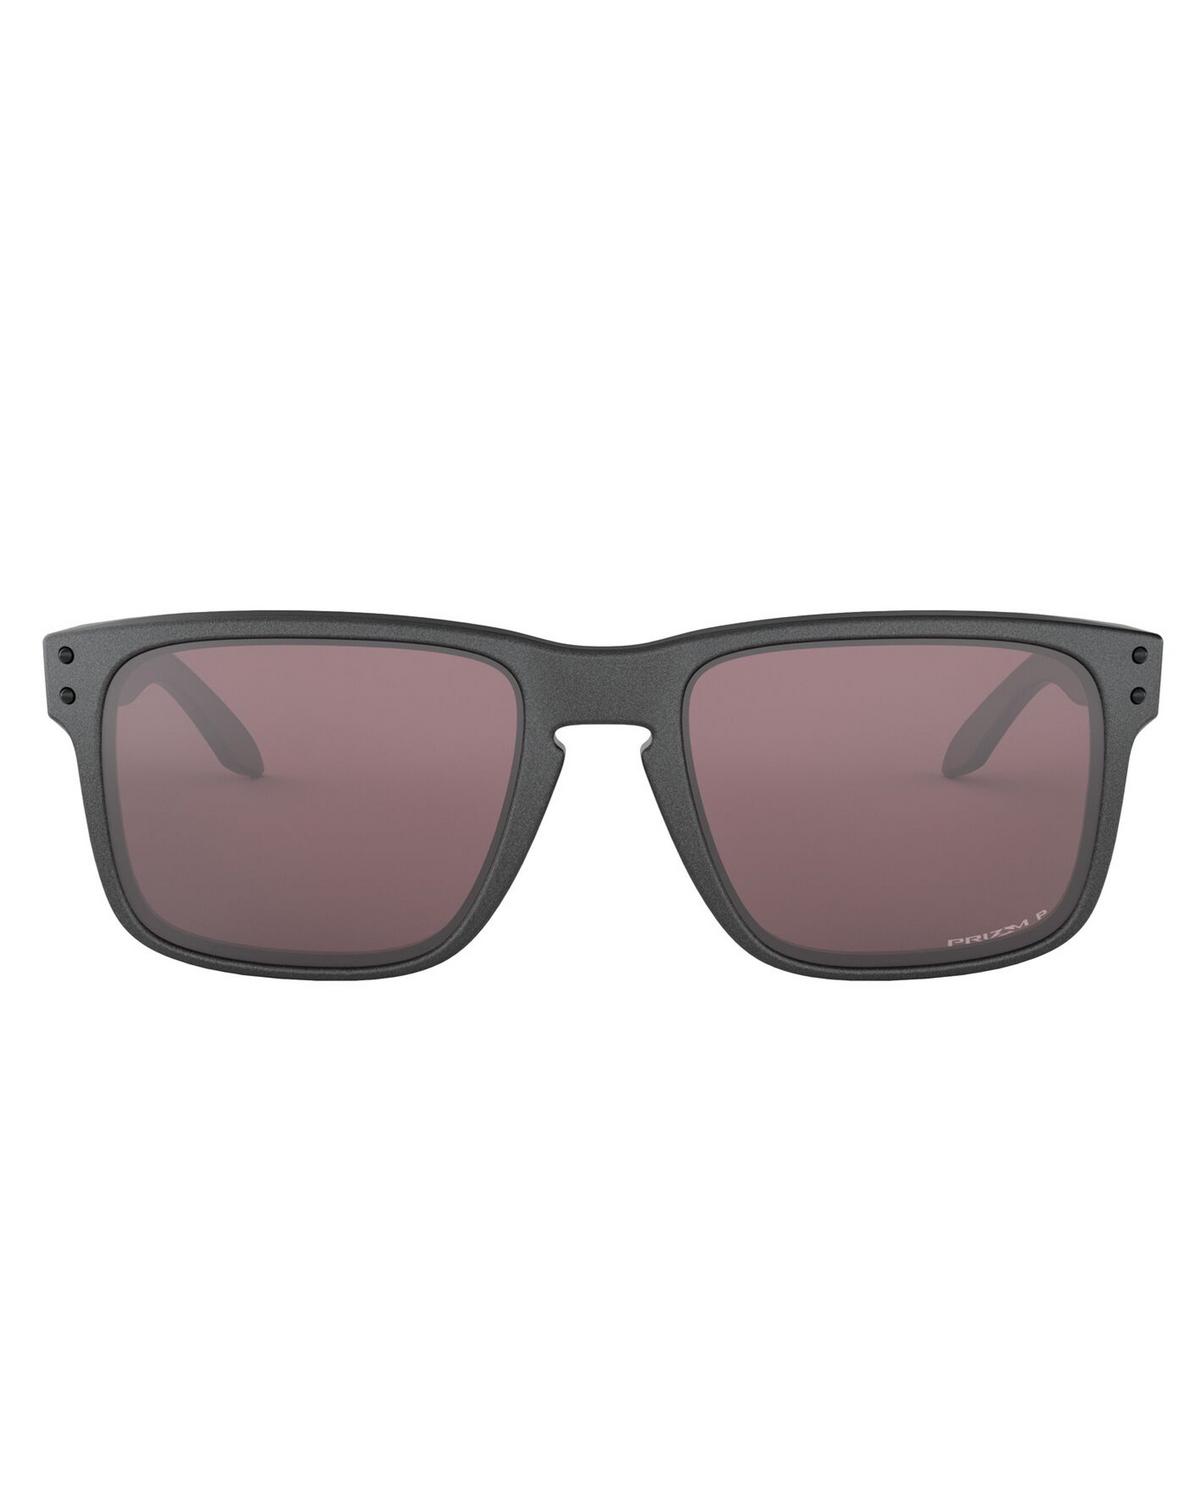 Oakley Holbrook Sunglasses -  Light Grey